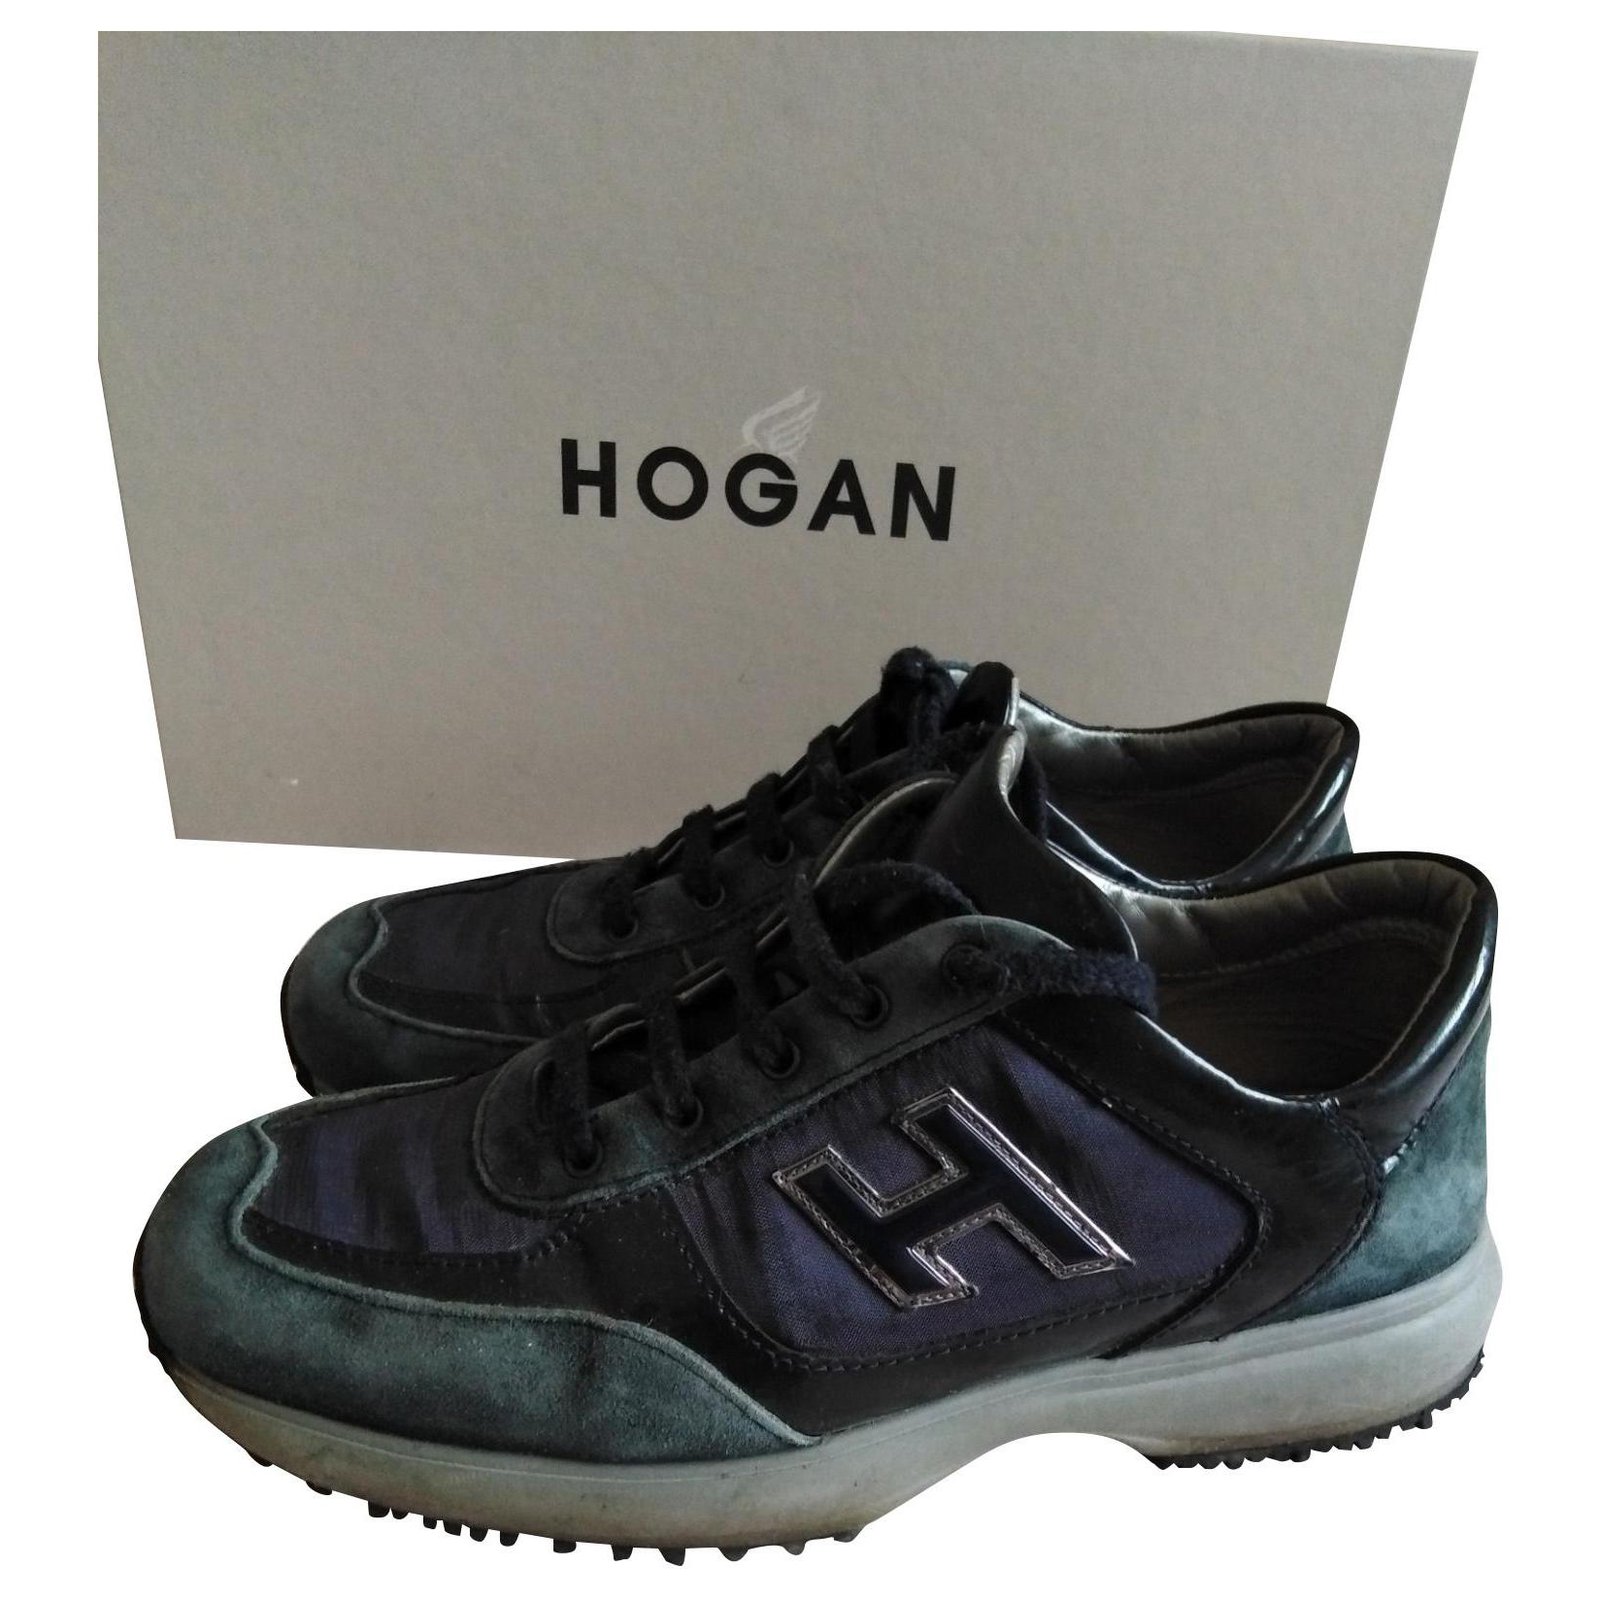 hogan classic shoes